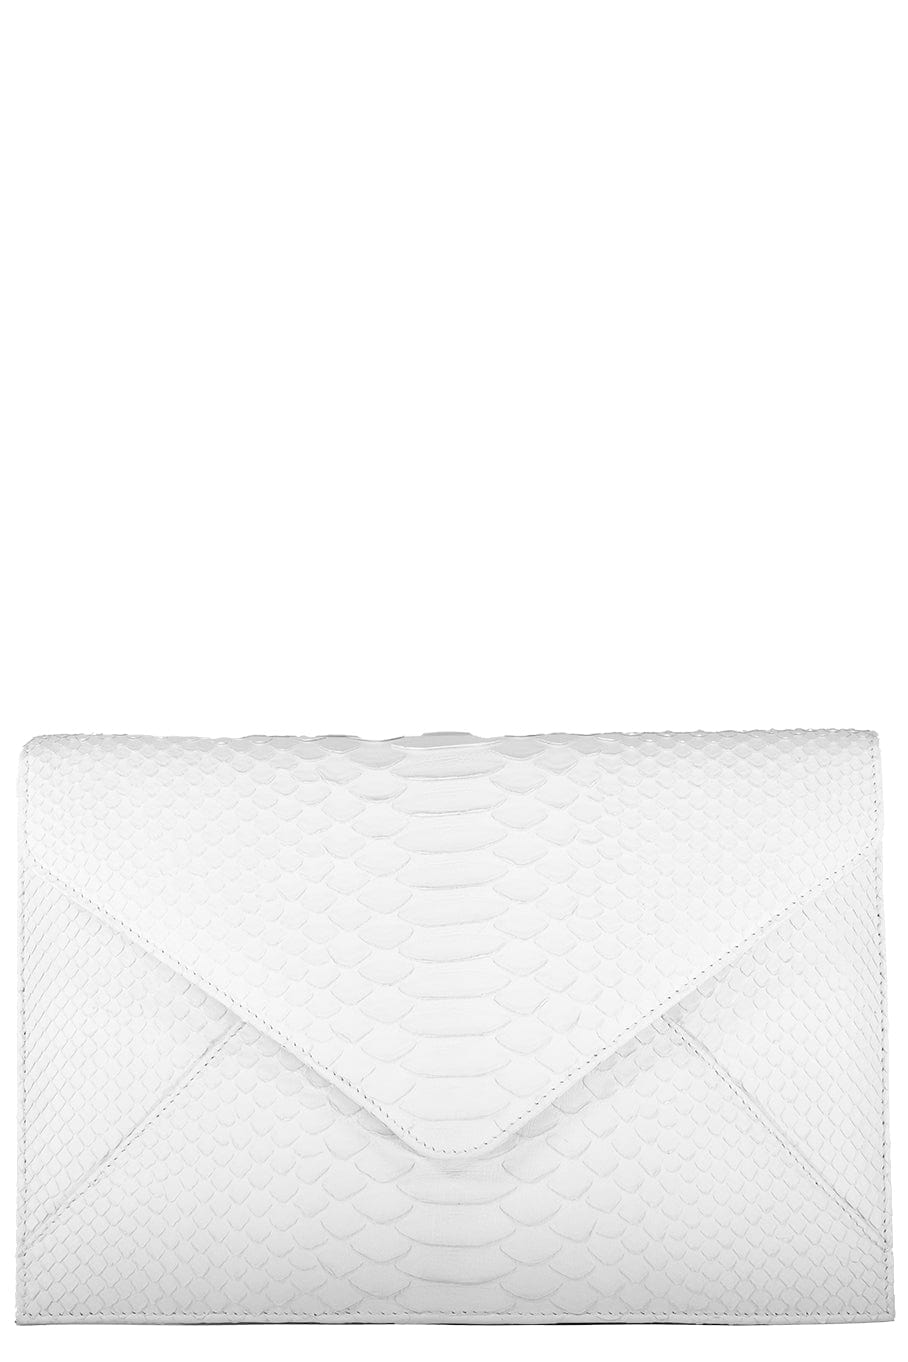 Envelope Clutch - White HANDBAGCLUTCHES JADA LOVELESS   